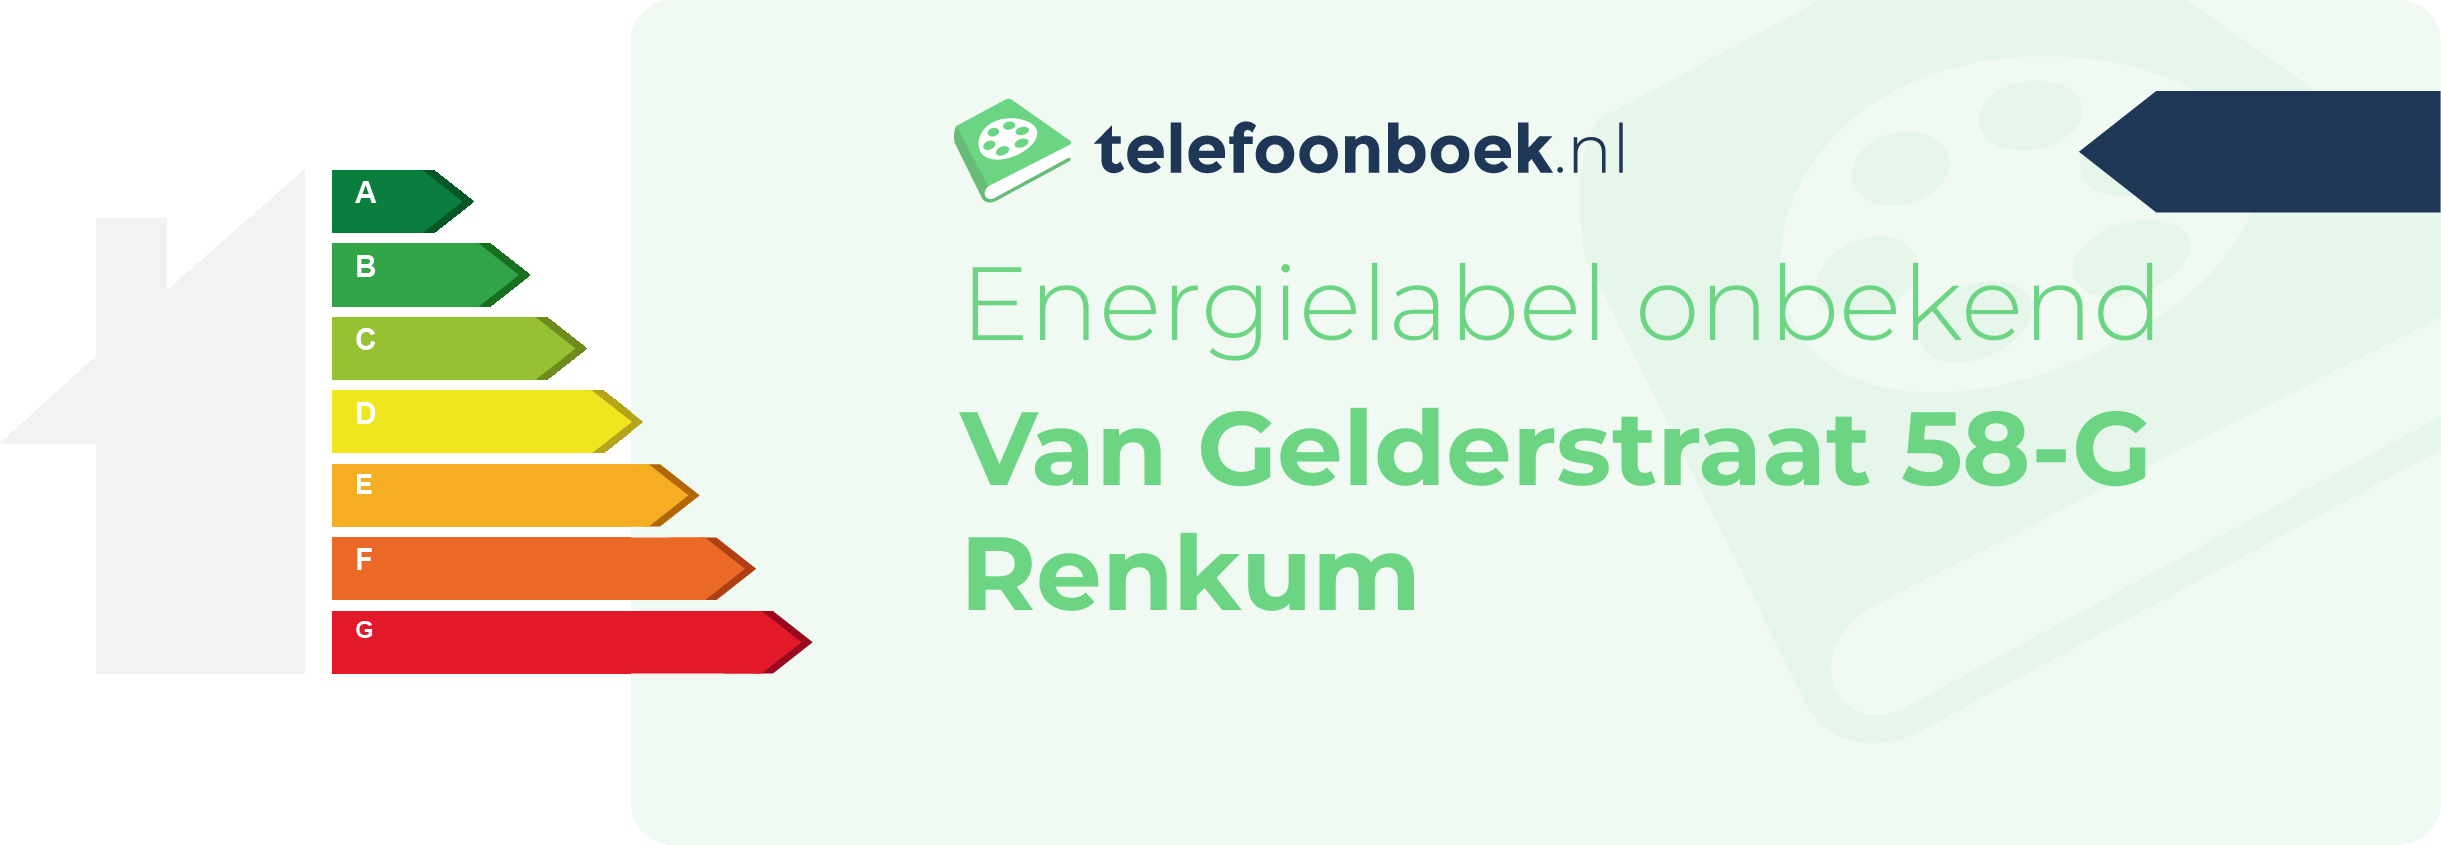 Energielabel Van Gelderstraat 58-G Renkum